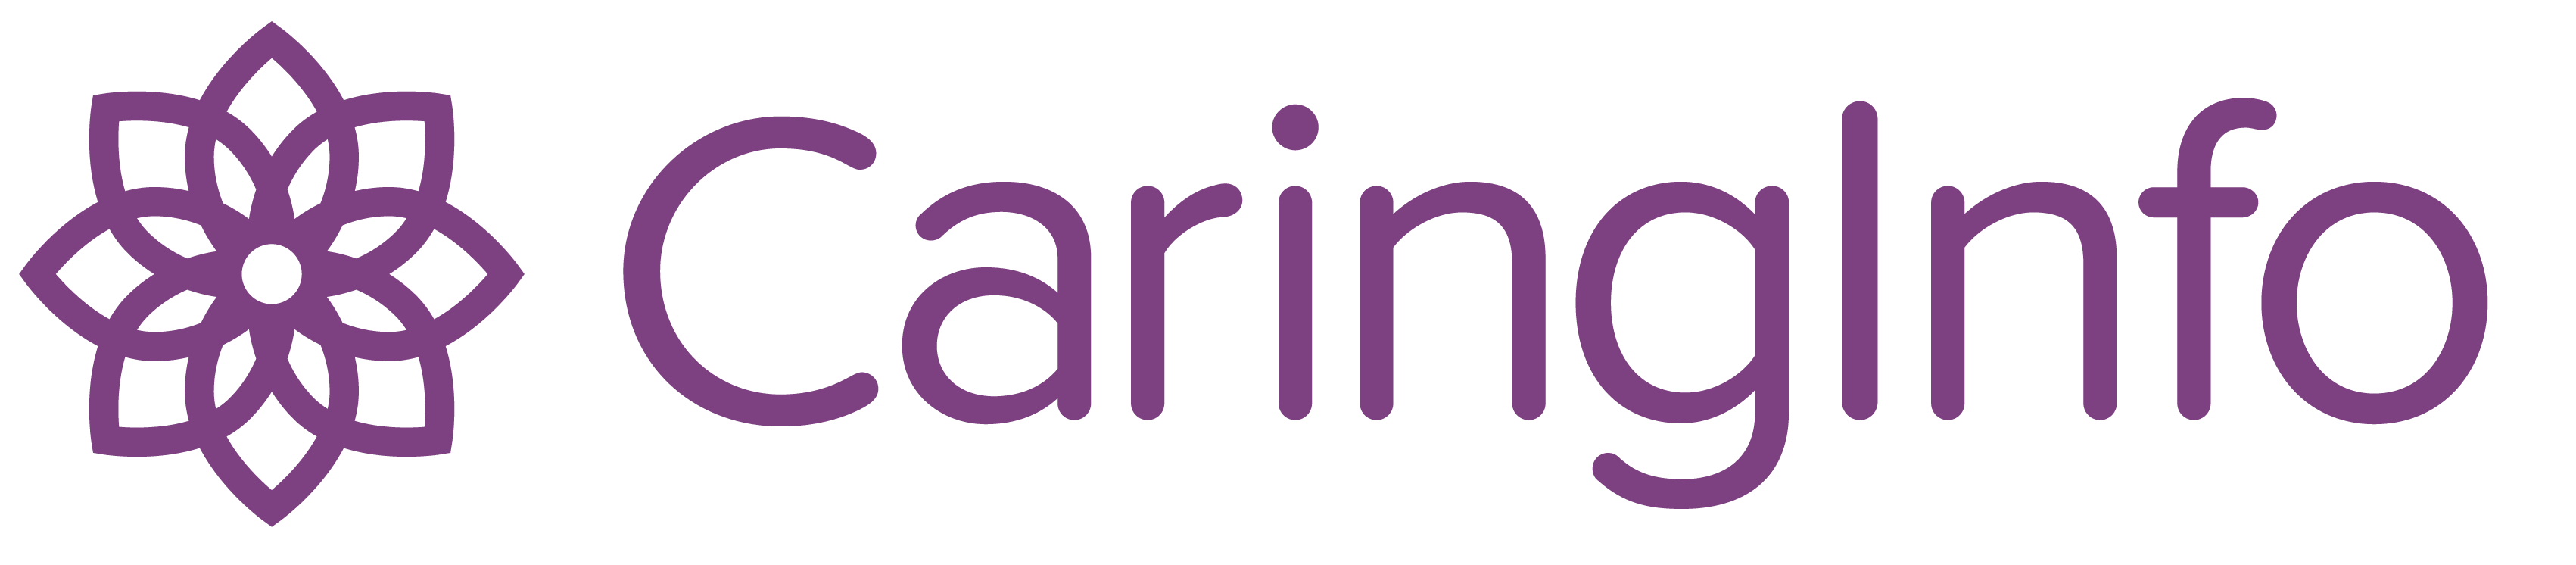 CaringInfo logo